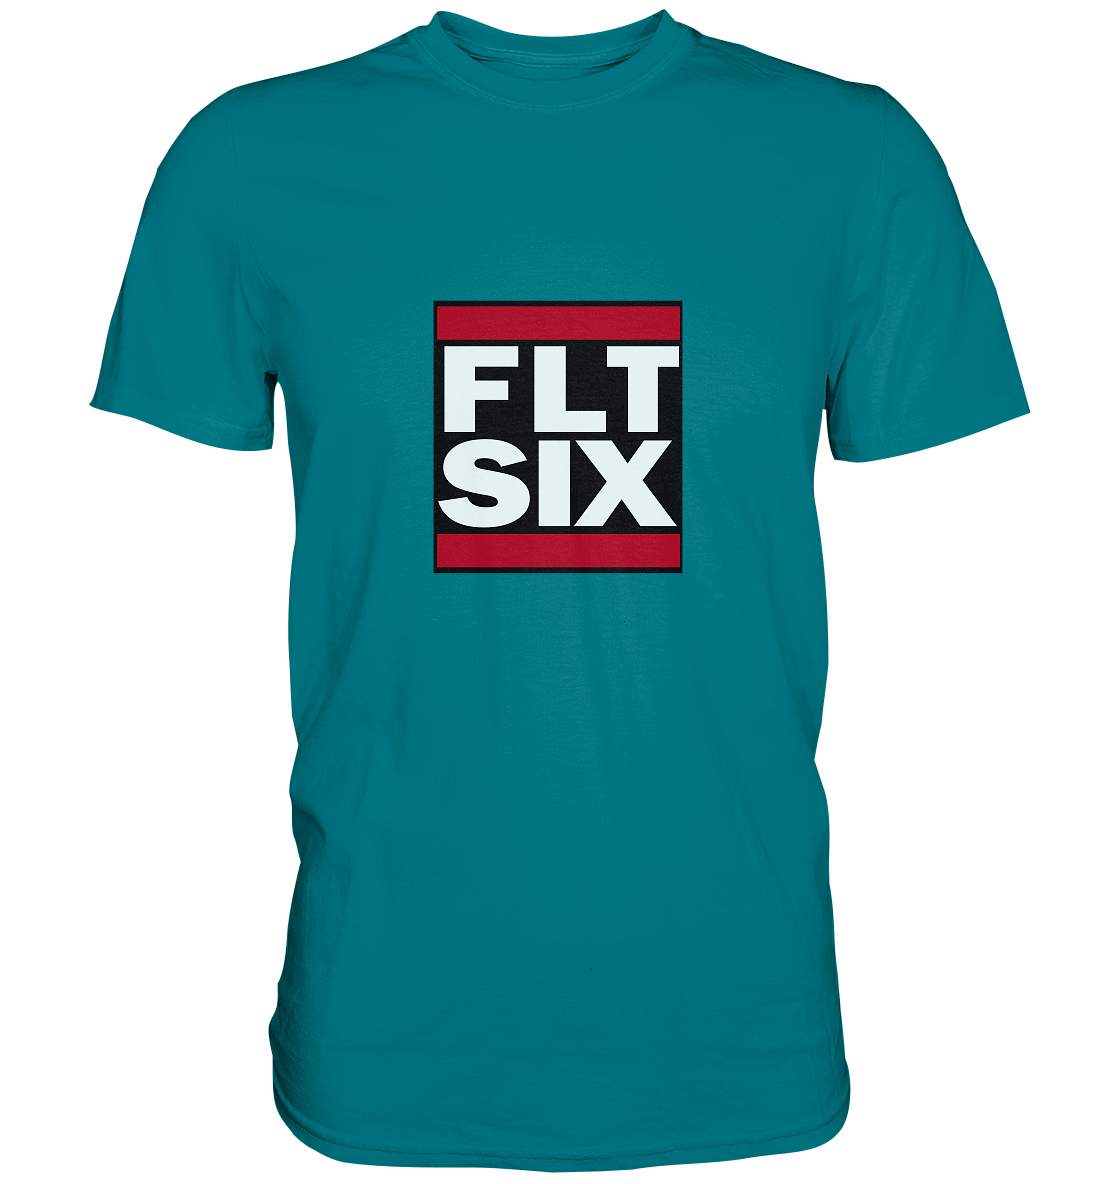 FLT SIX  - Premium Shirt